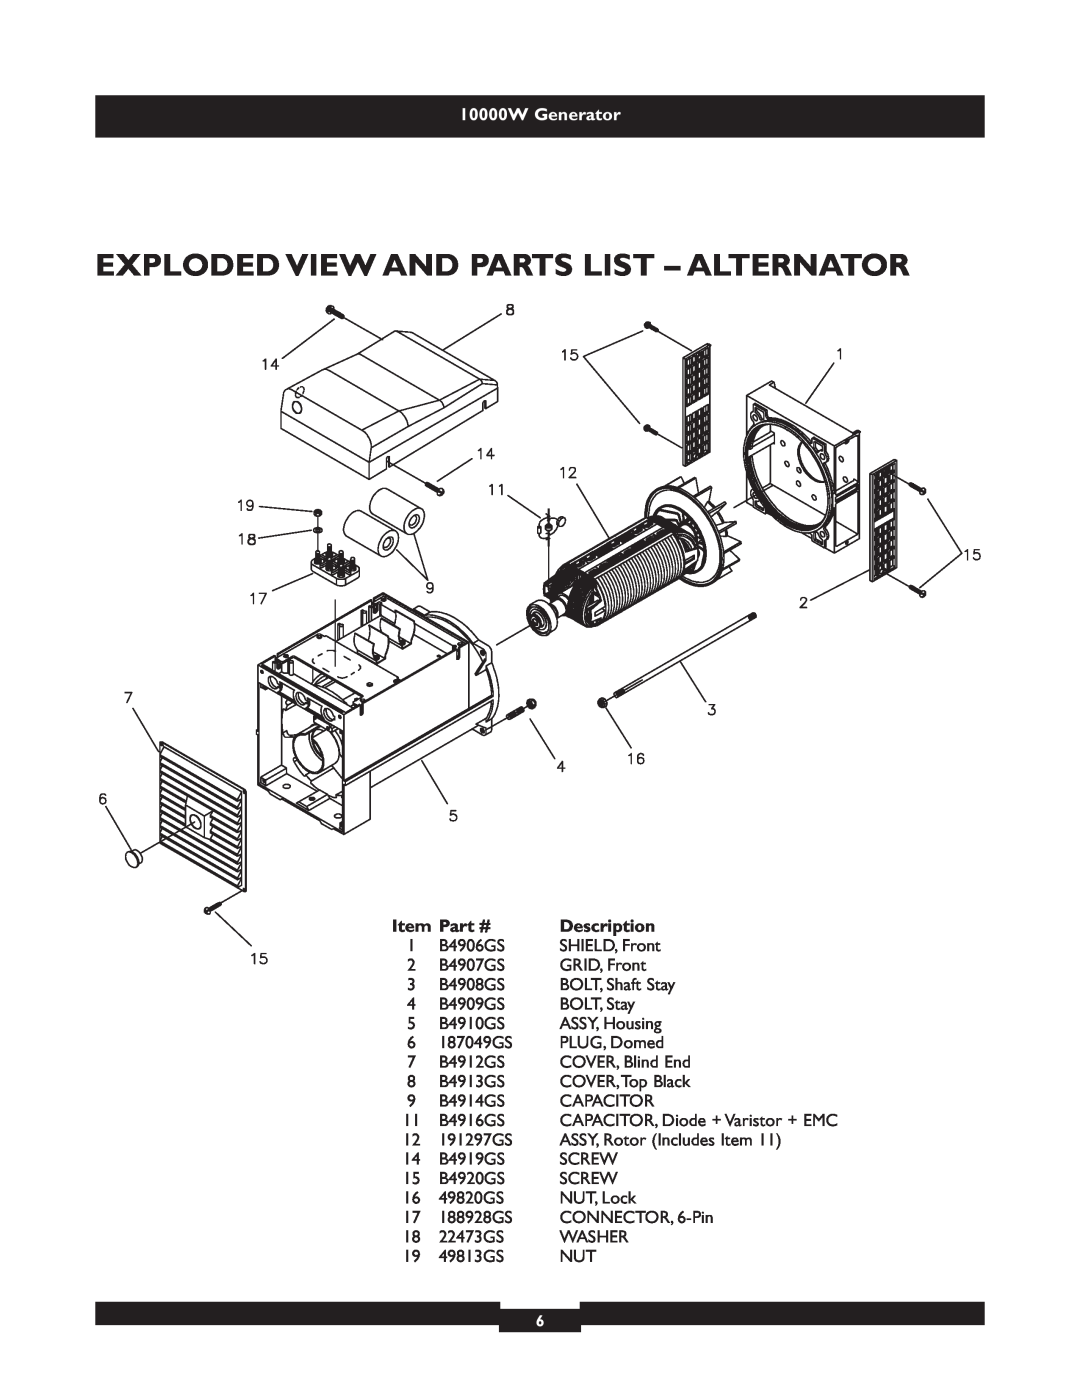 Briggs & Stratton 9801 manual Exploded View And Parts List - Alternator, 10000W Generator, Description 